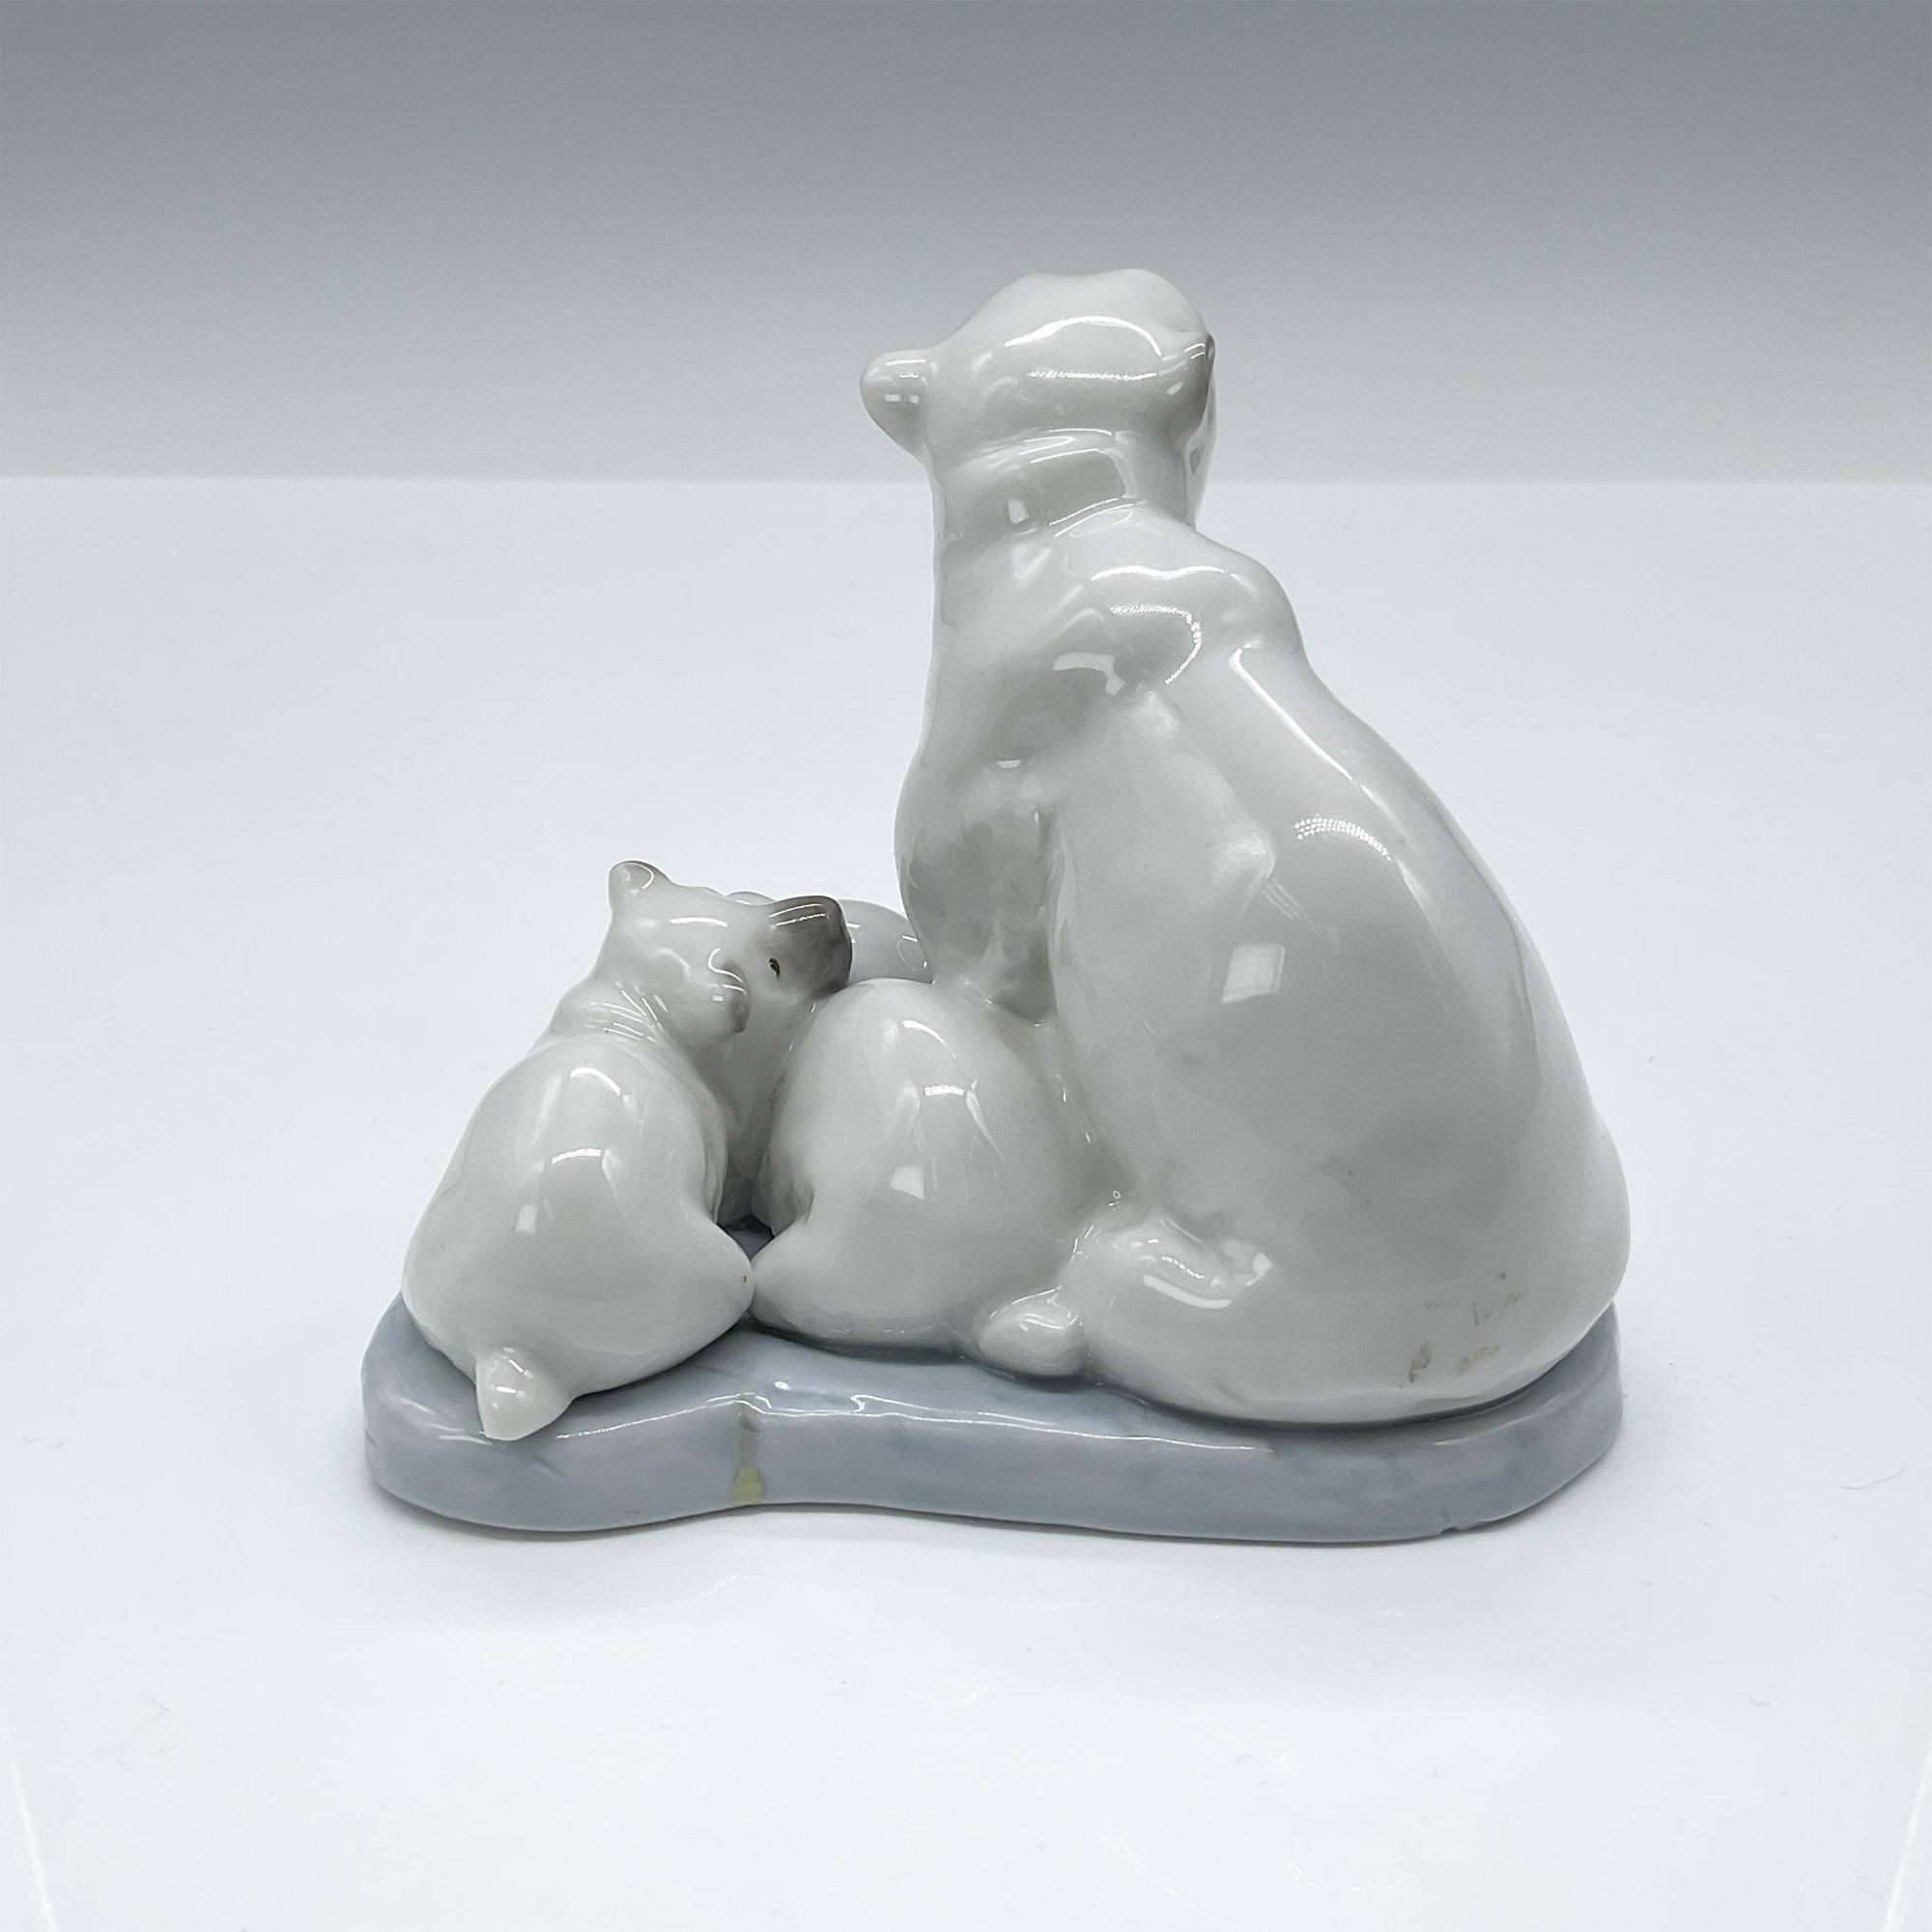 Miniature Polar Bear 1005434 - Lladro Porcelain Figurine - Image 2 of 3